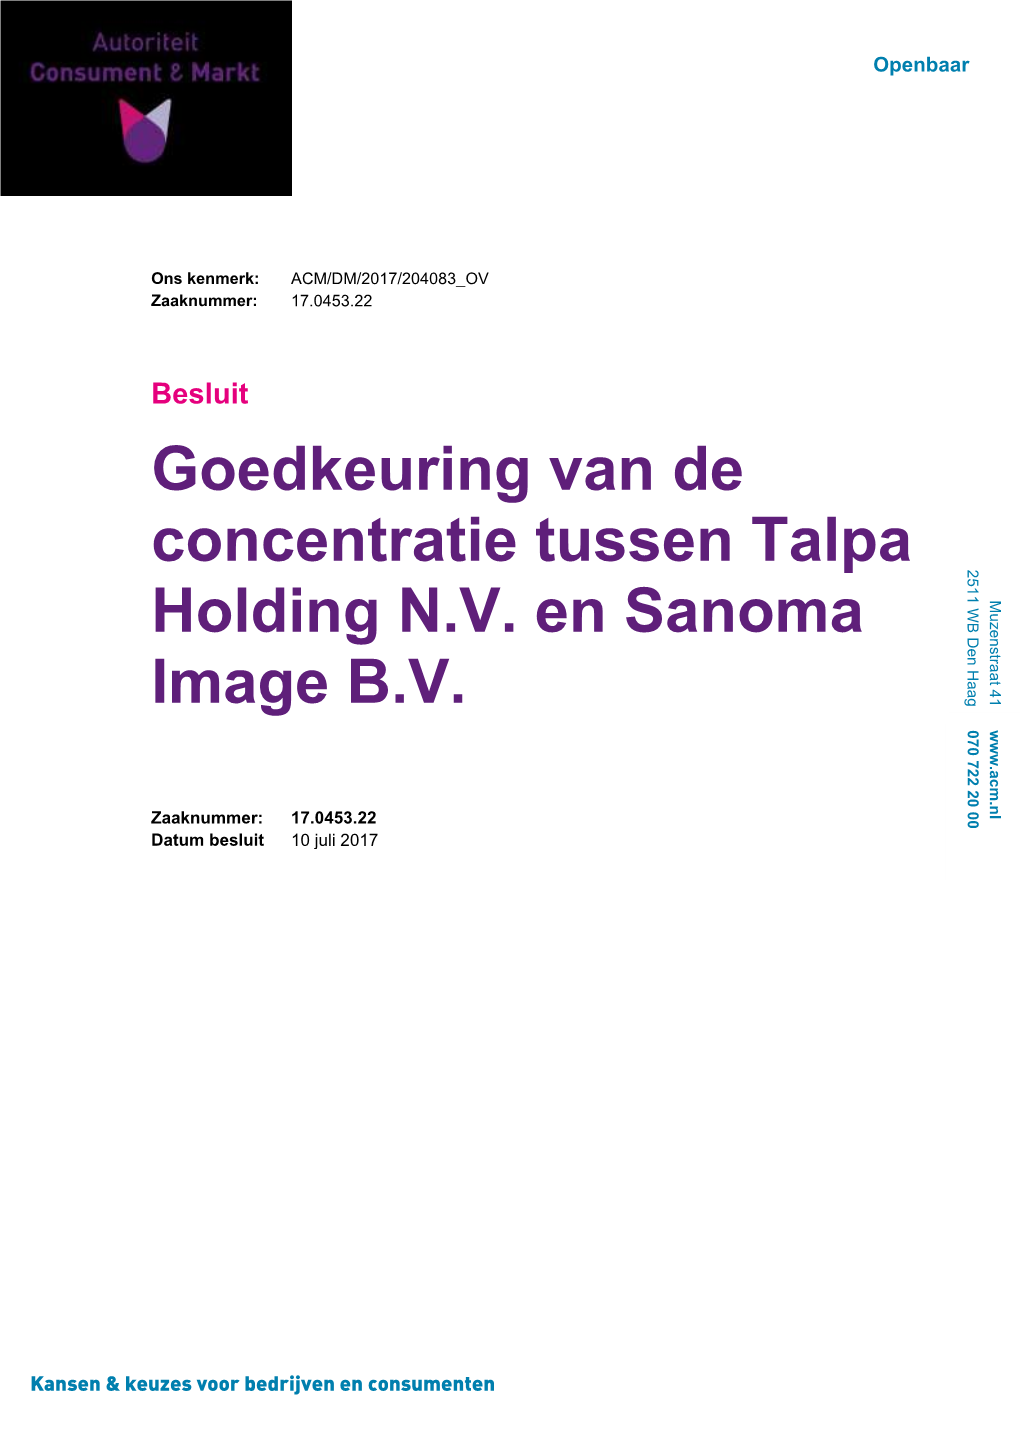 Goedkeuring Van De Concentratie Tussen Talpa Holding N.V. En Pagina Sanoma Image B.V